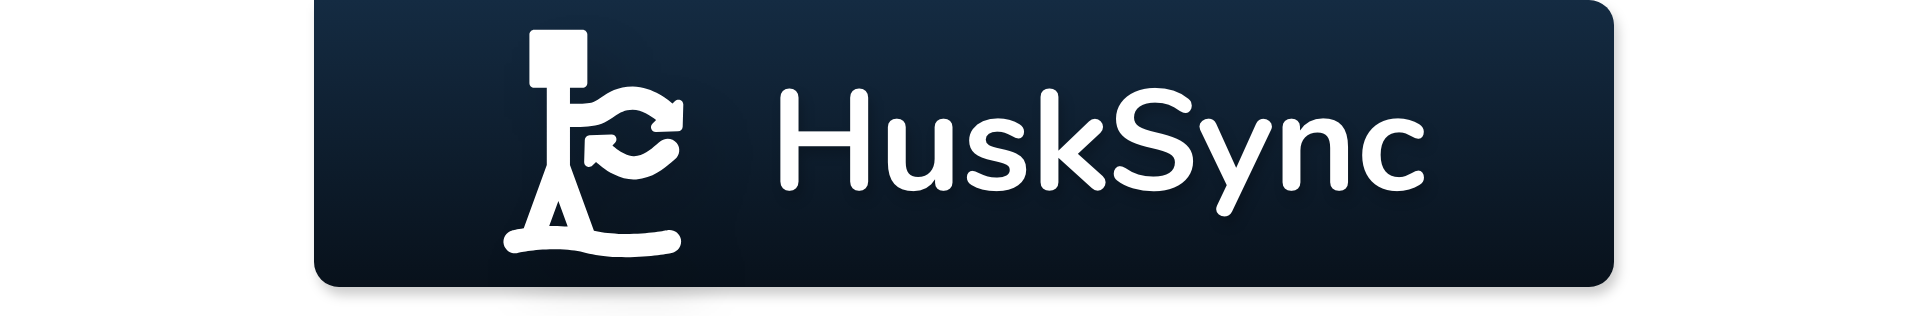 HuskSync banner